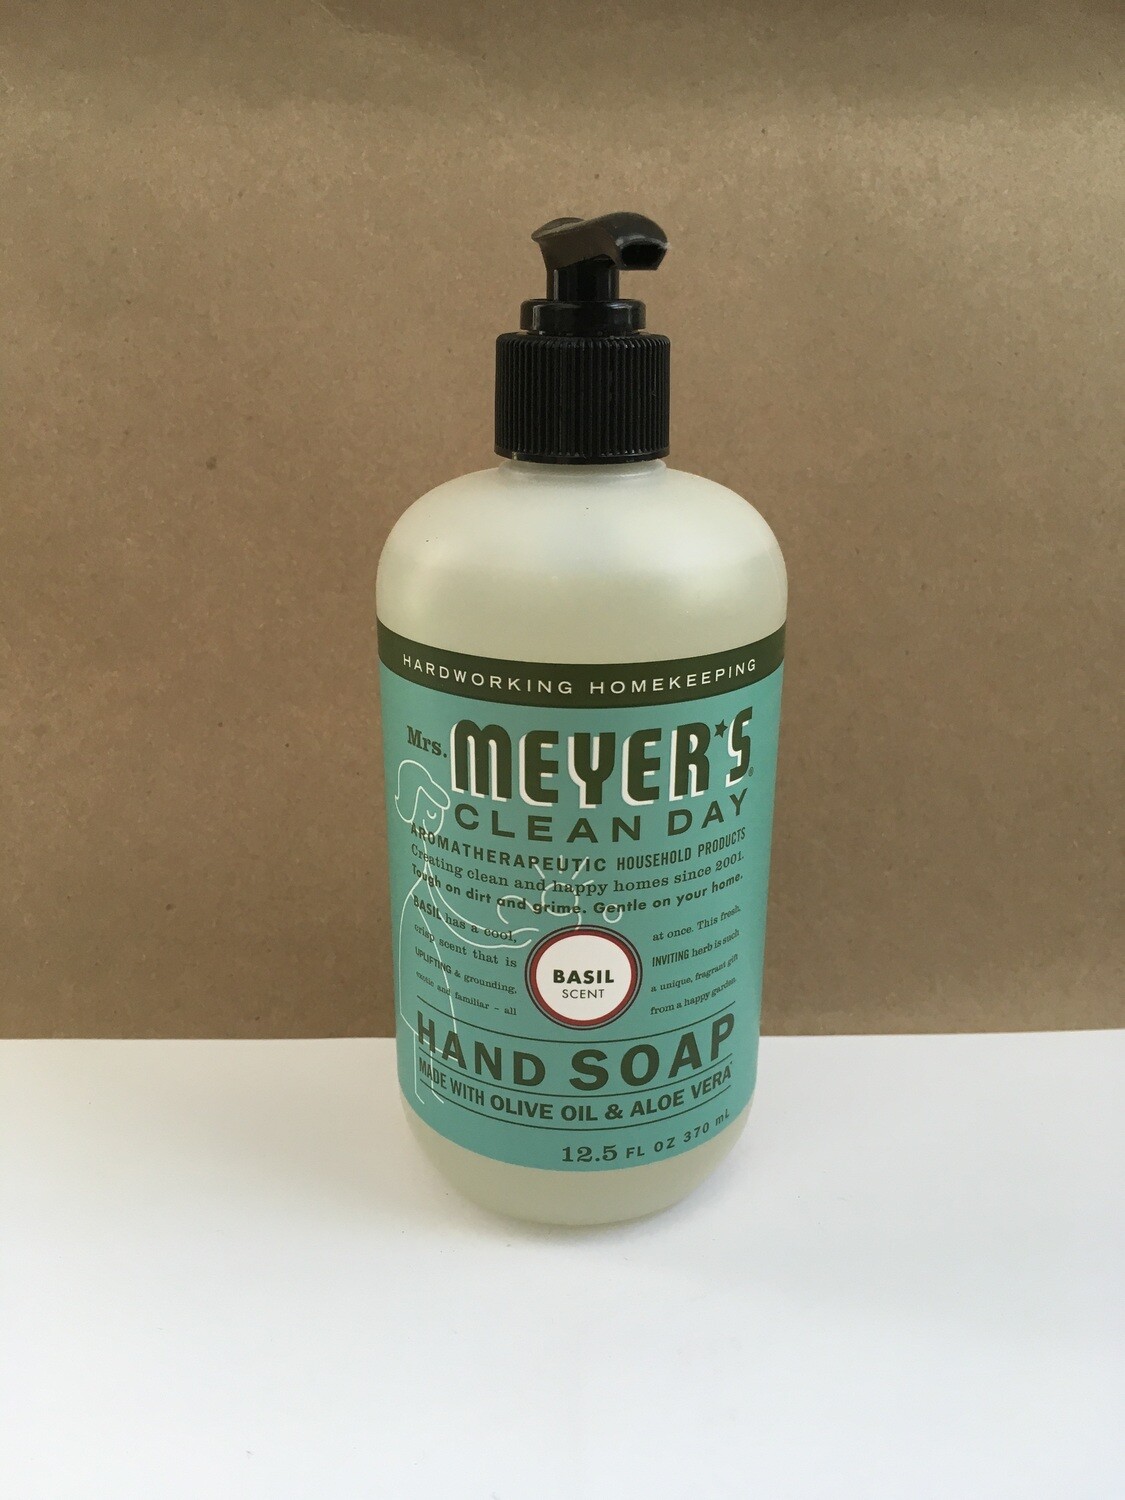 Health and Beauty / Soap / Mrs. Meyers Hand Soap Basil